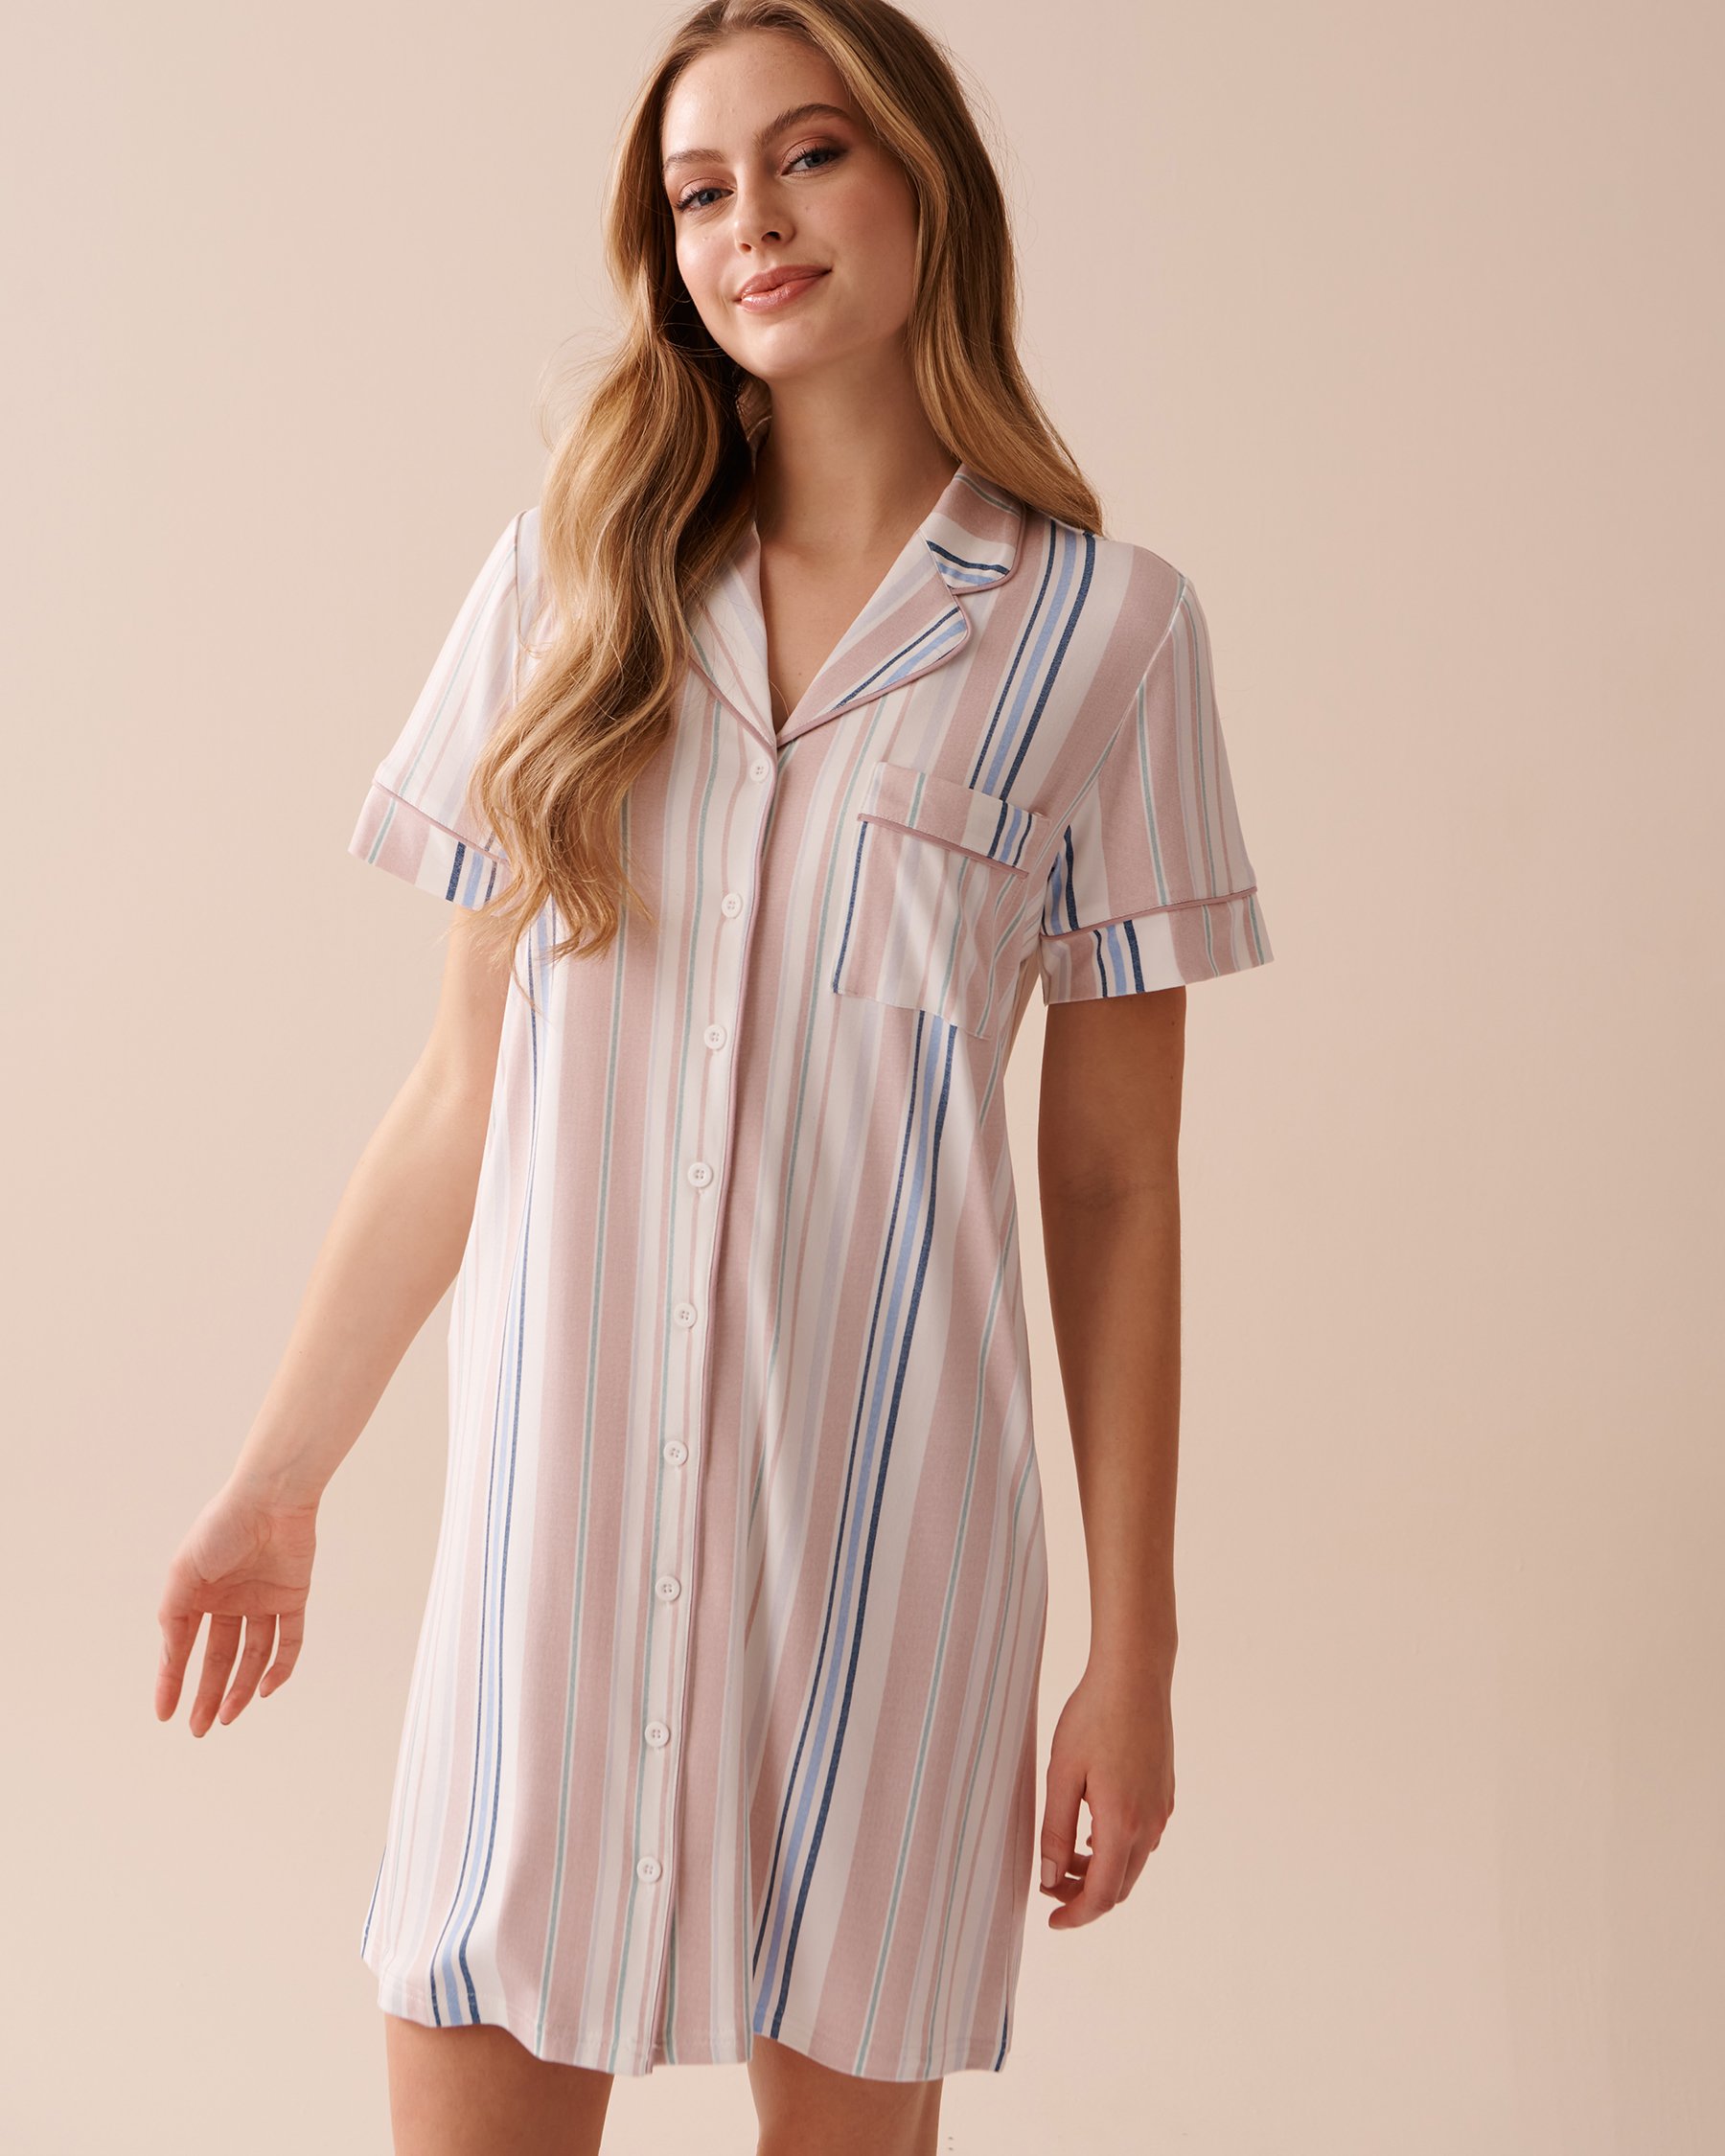 Nightdresses Pajamas Set Comfortable Pyjamas Women Sleepwear Keep Warm Home  Clothes Nightwear (Pink XXL Code)